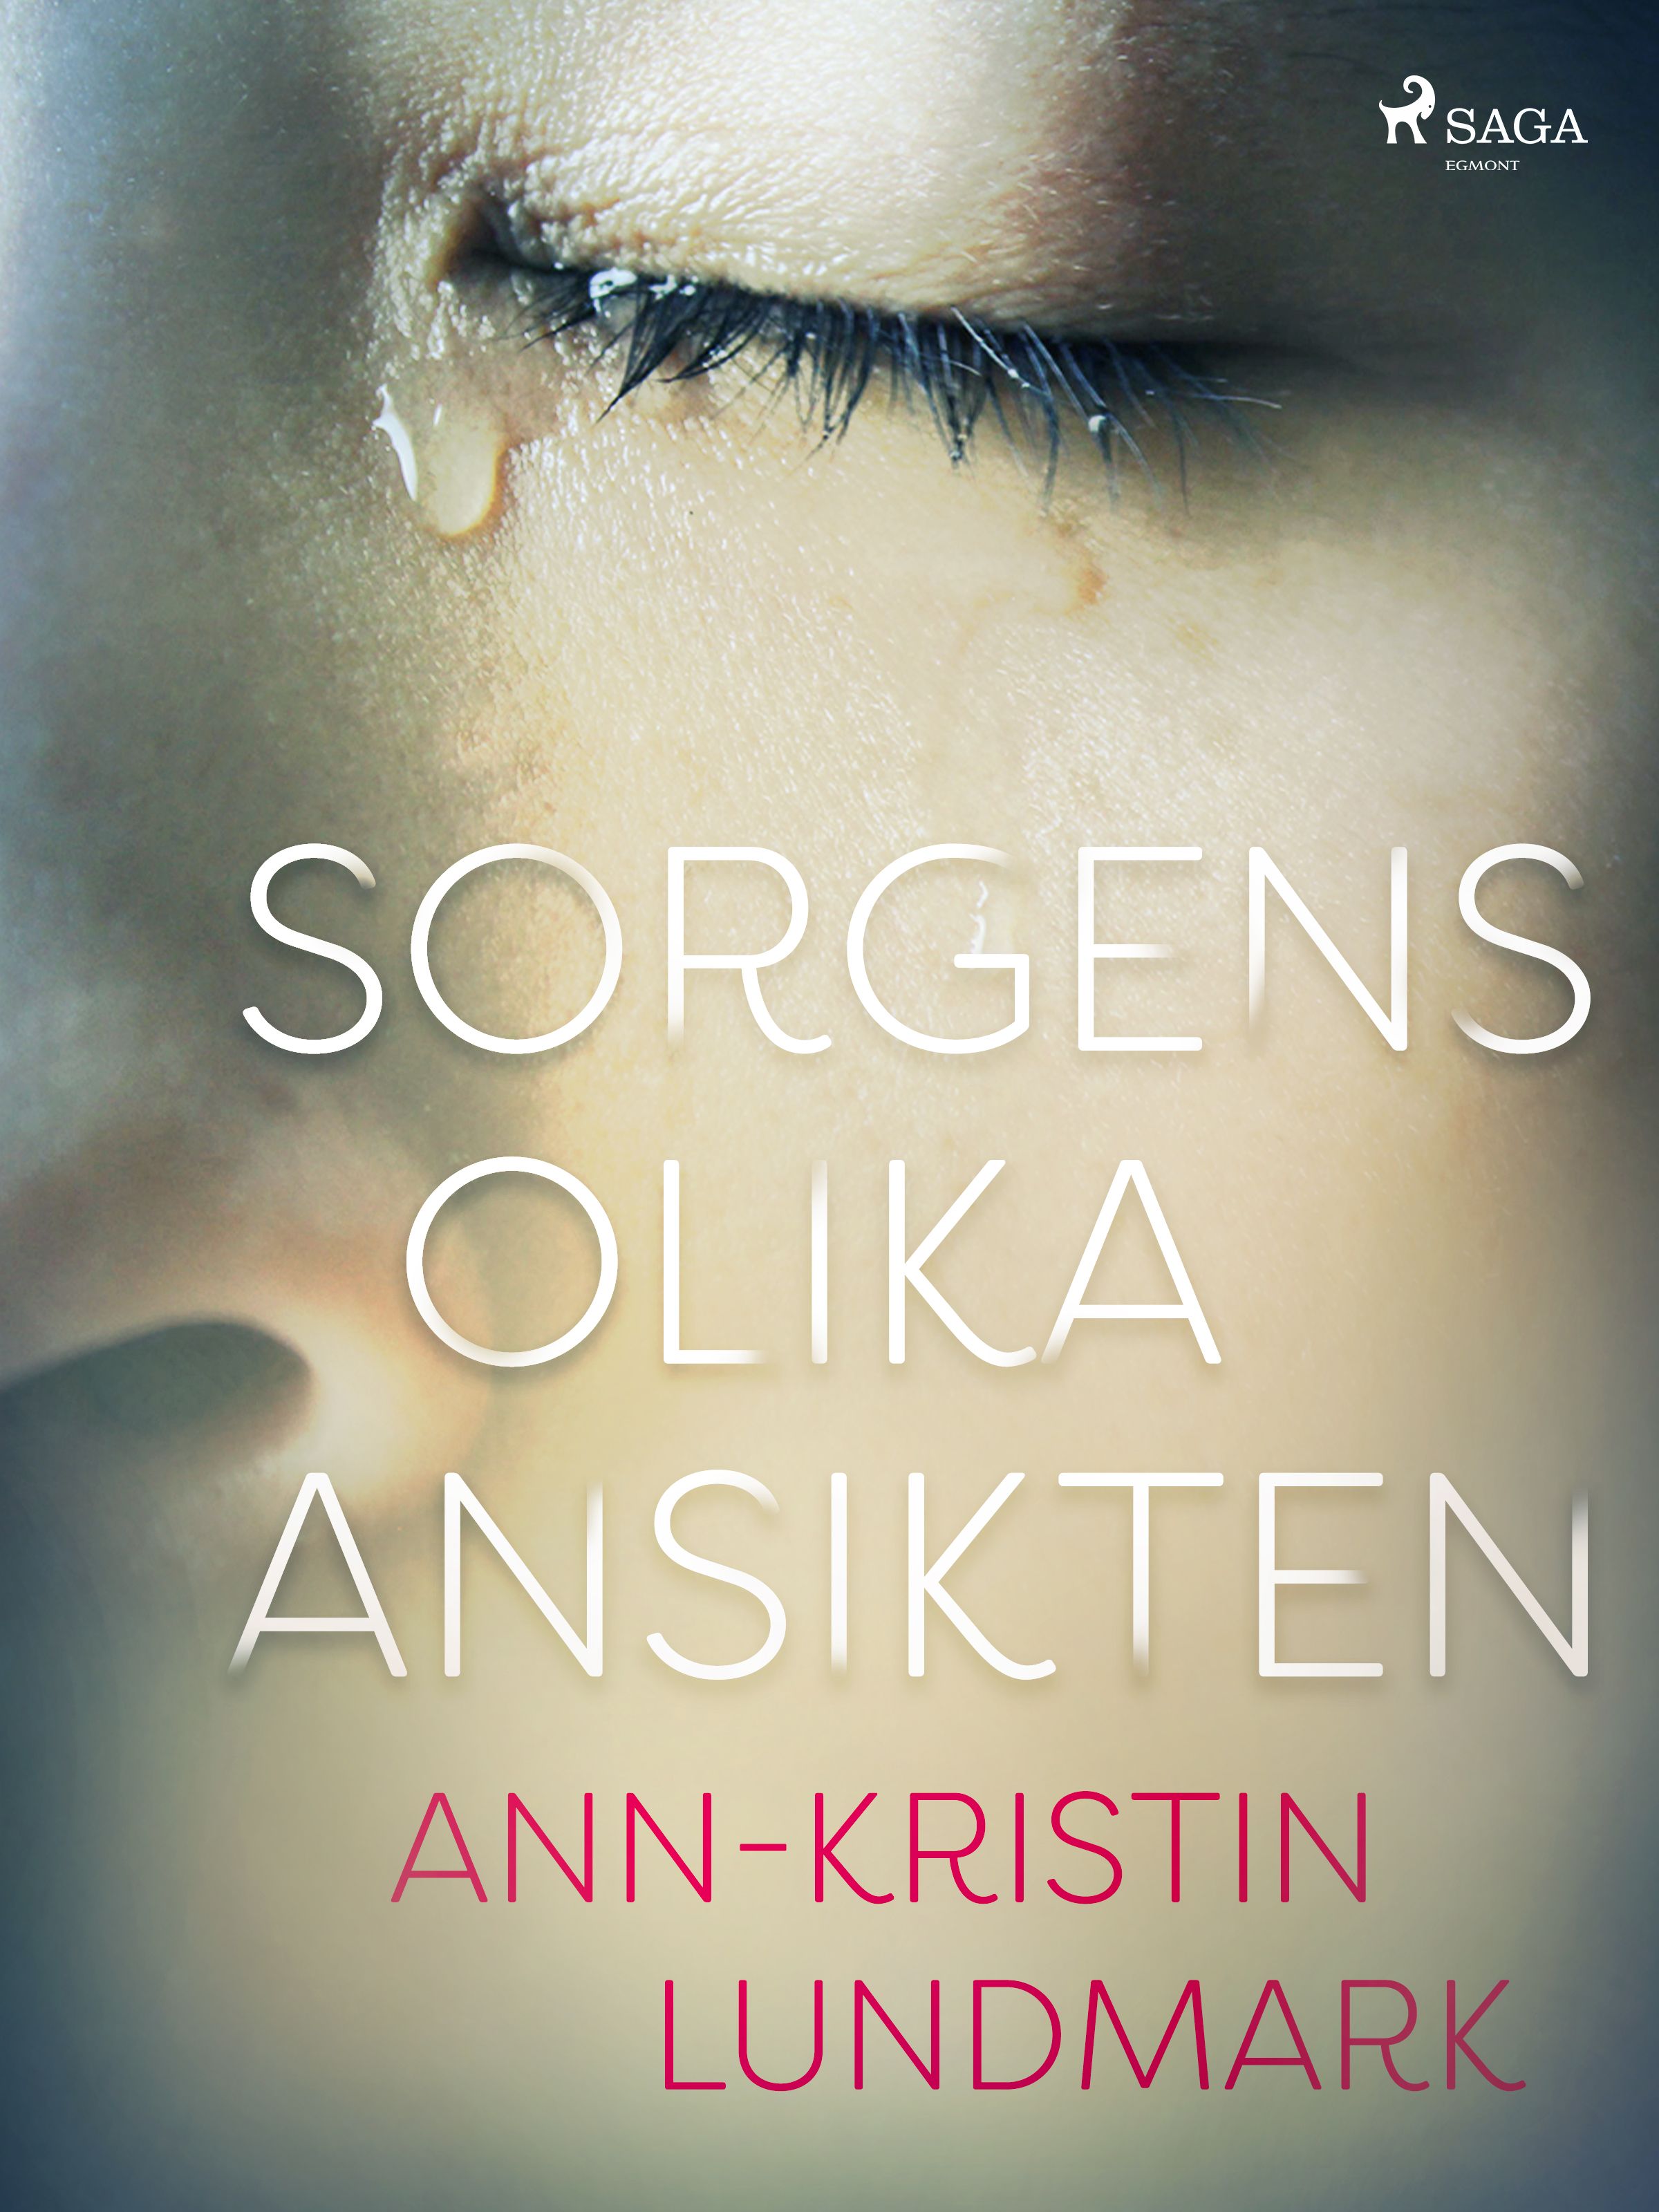 Sorgens olika ansikten, eBook by Ann-Kristin Lundmark